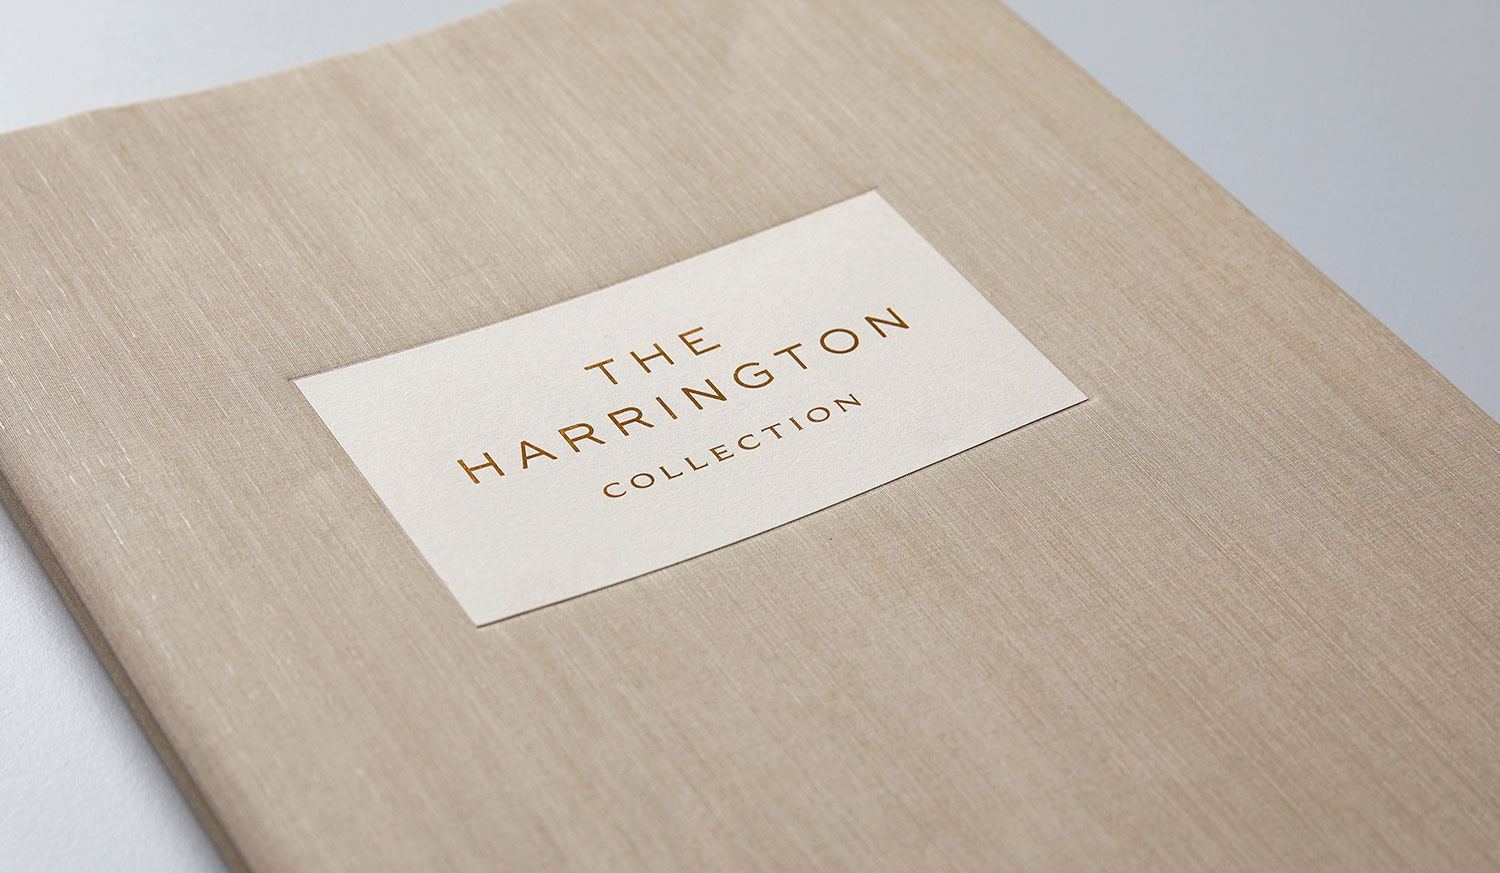 The Harrington Collection01